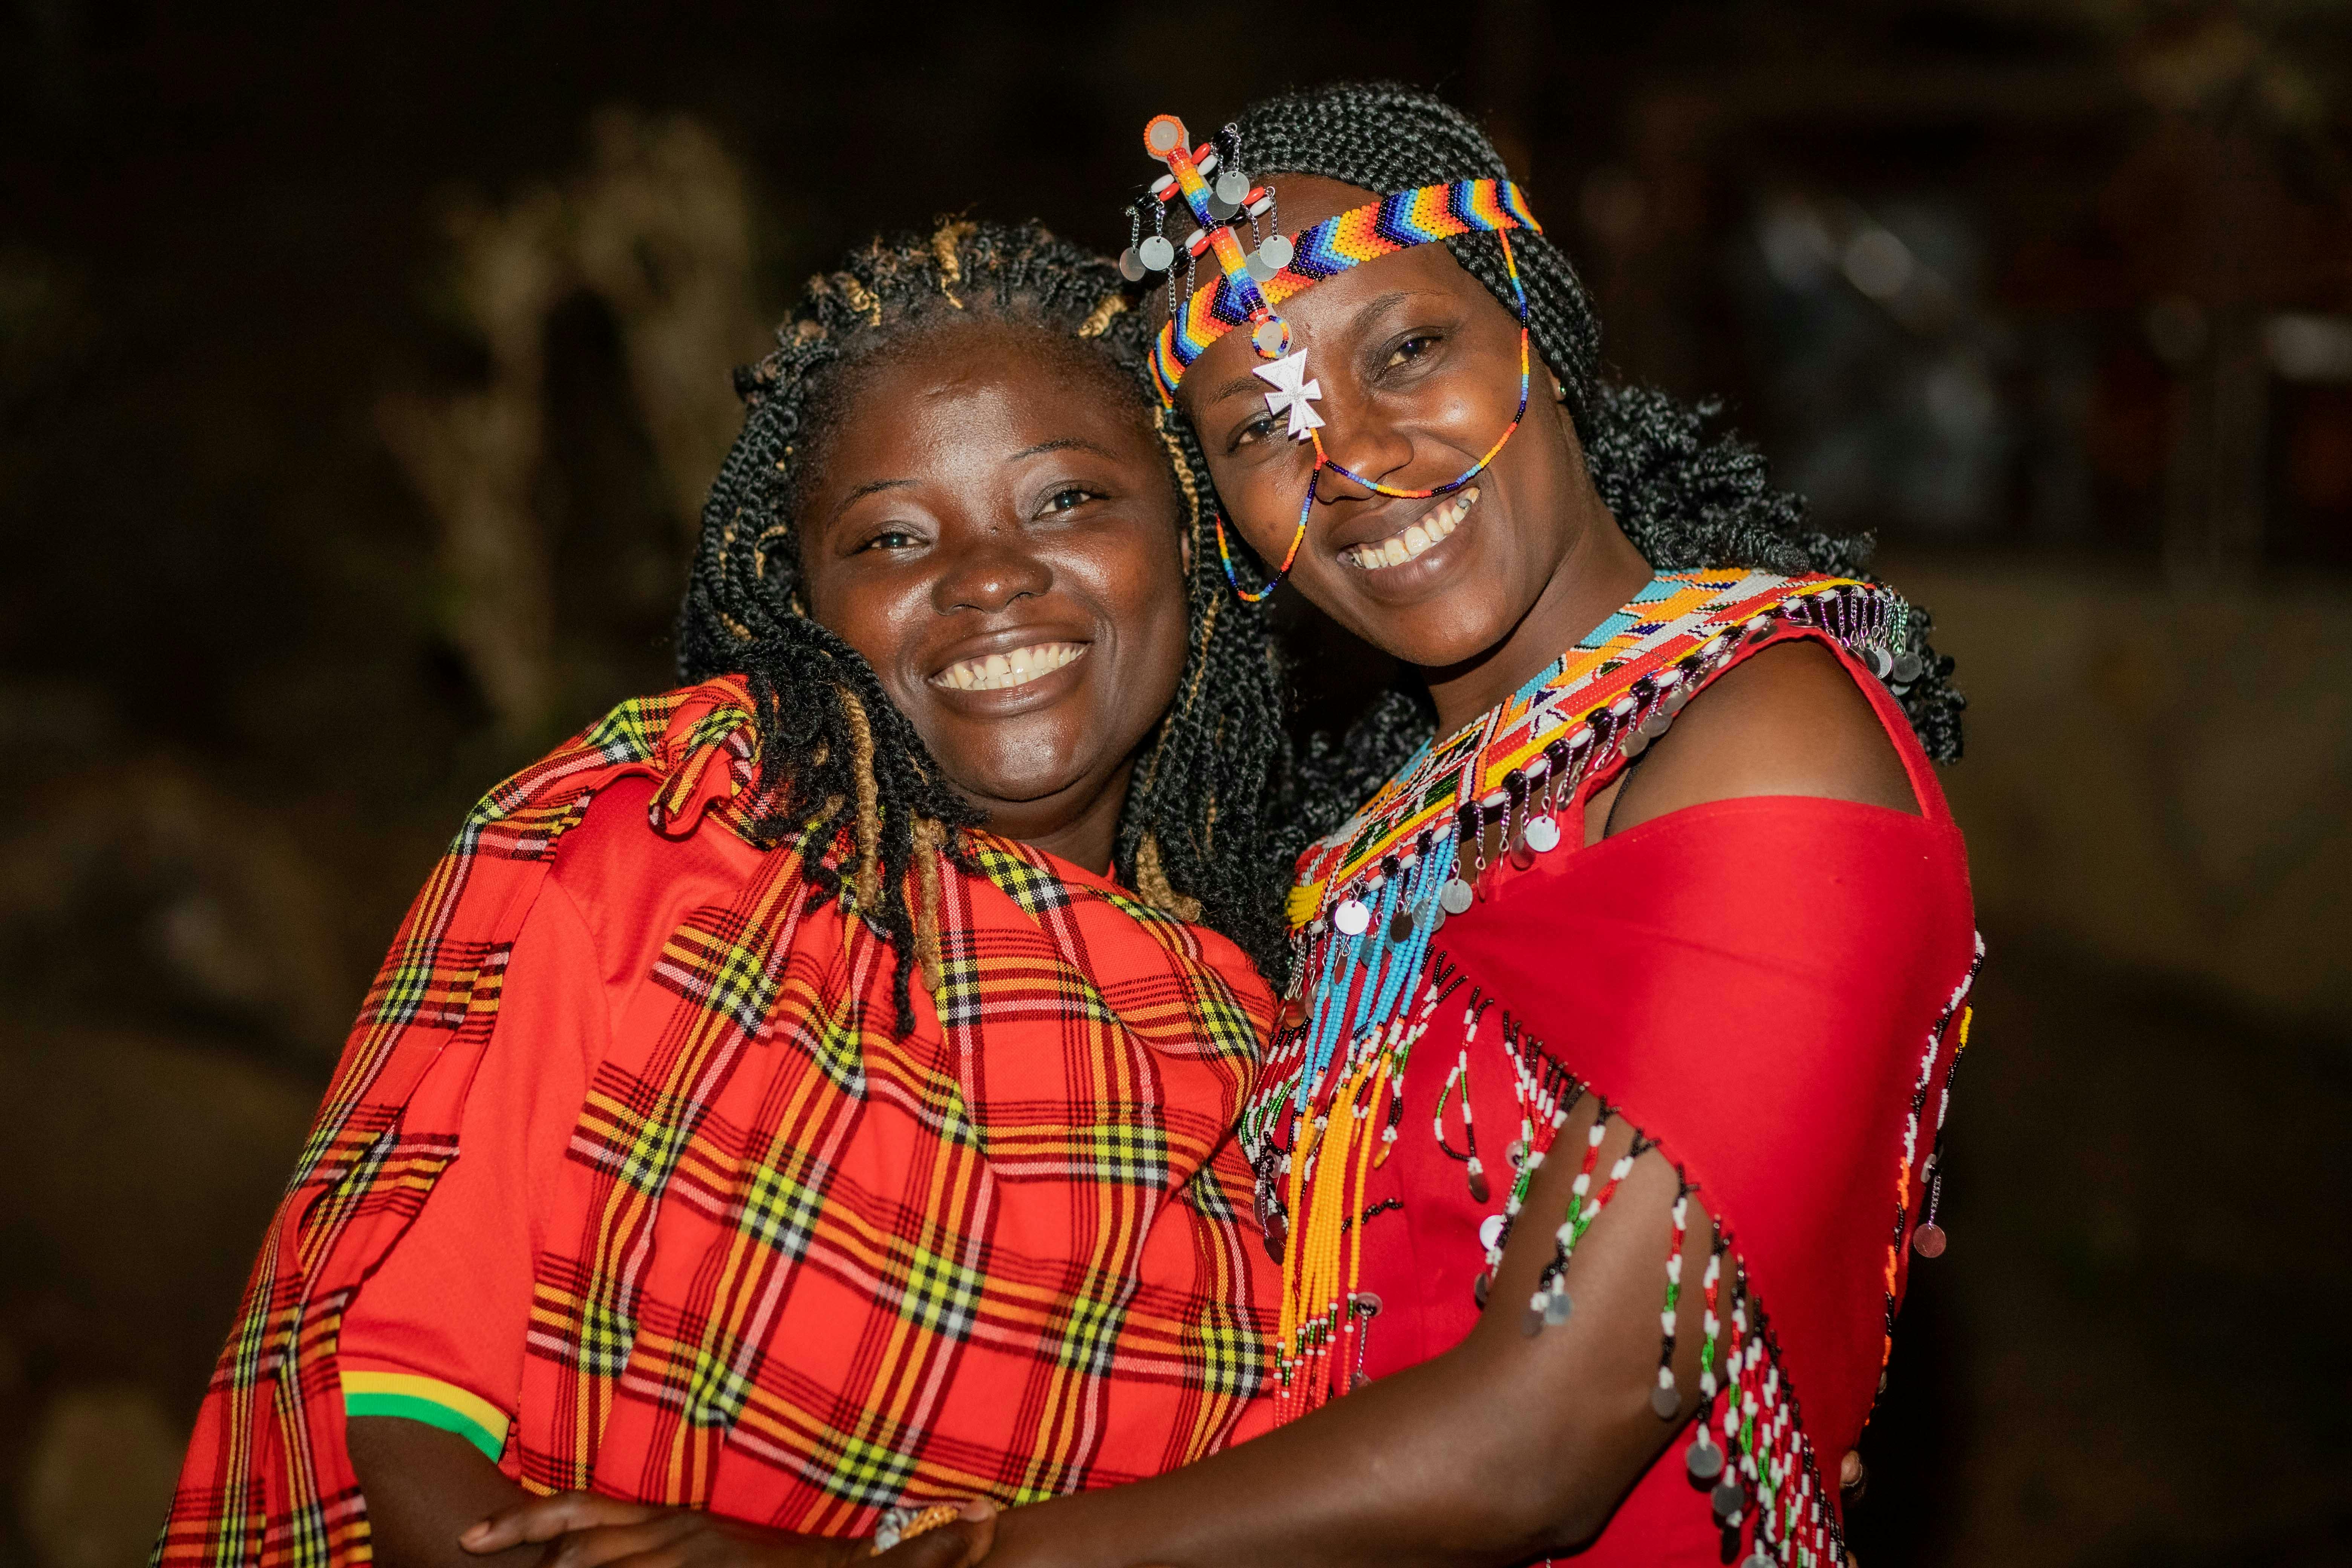 Beautiful Maasai Women in Traditional Clothing Editorial Image